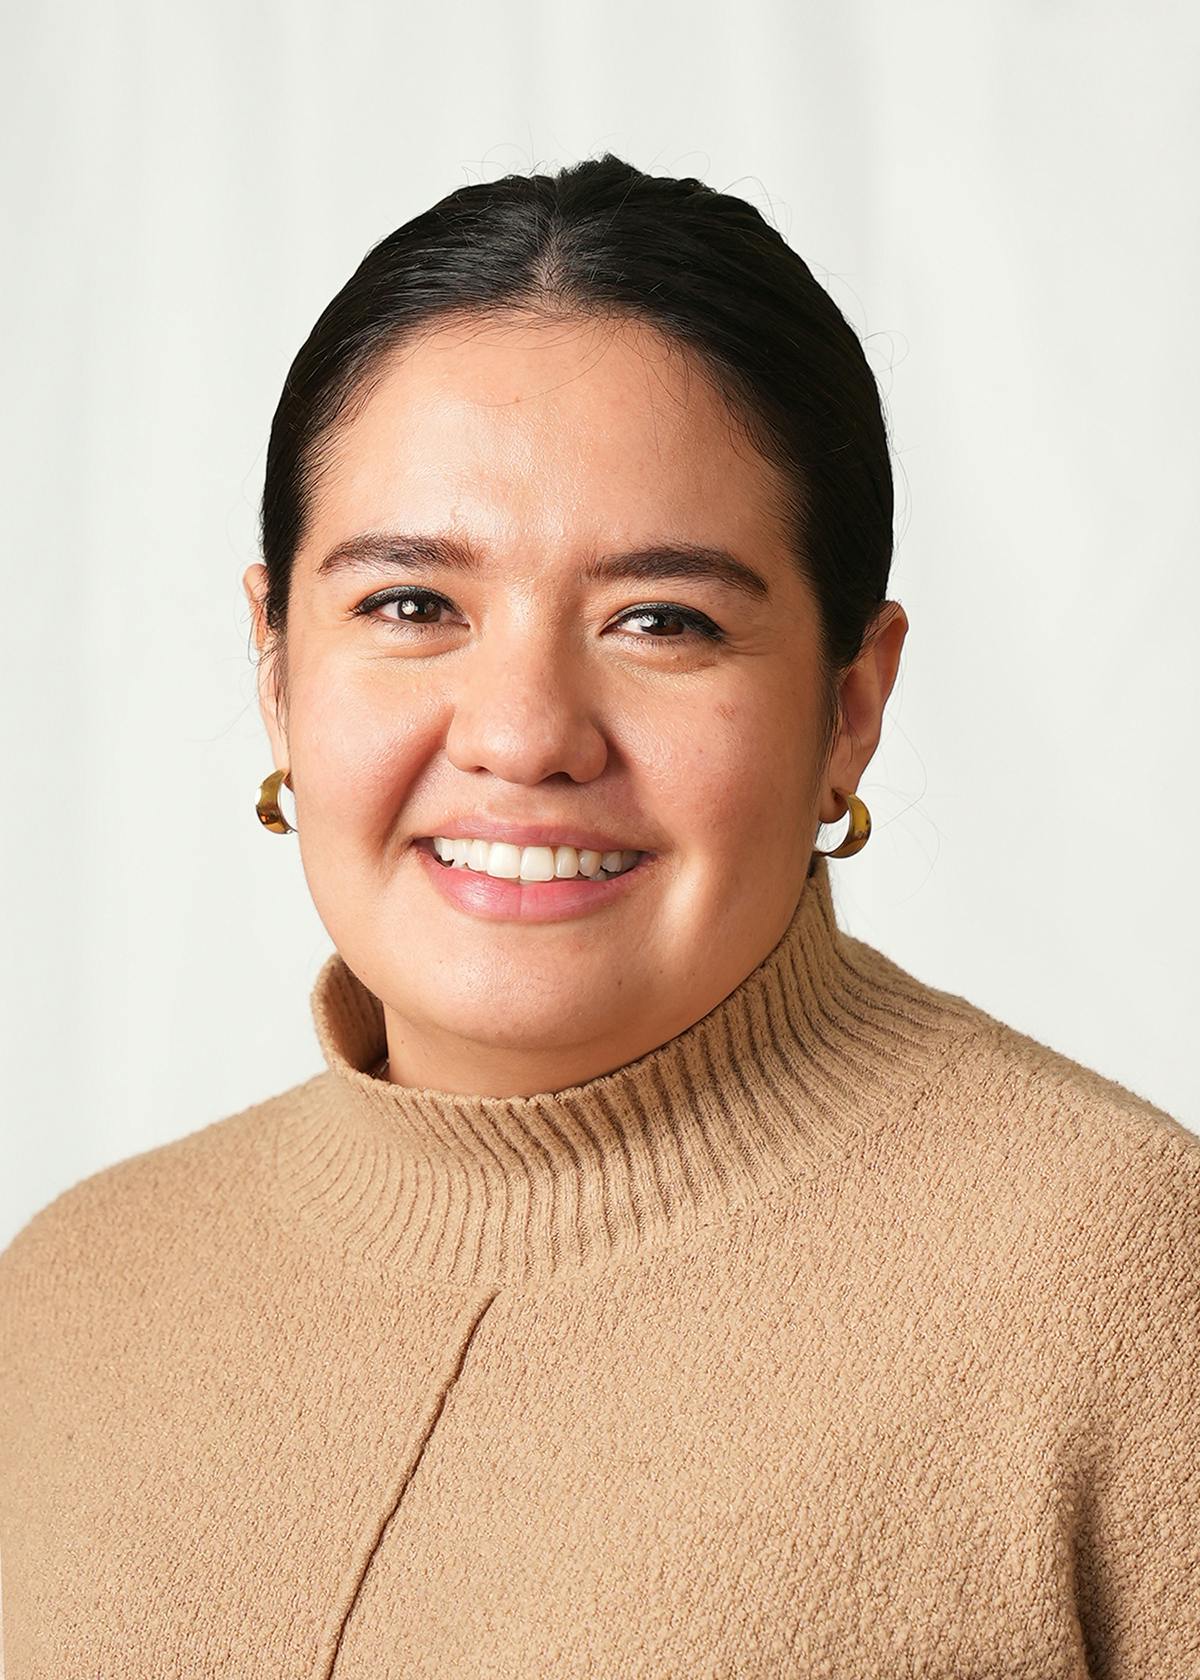 Team member, Gabby Rodriguez